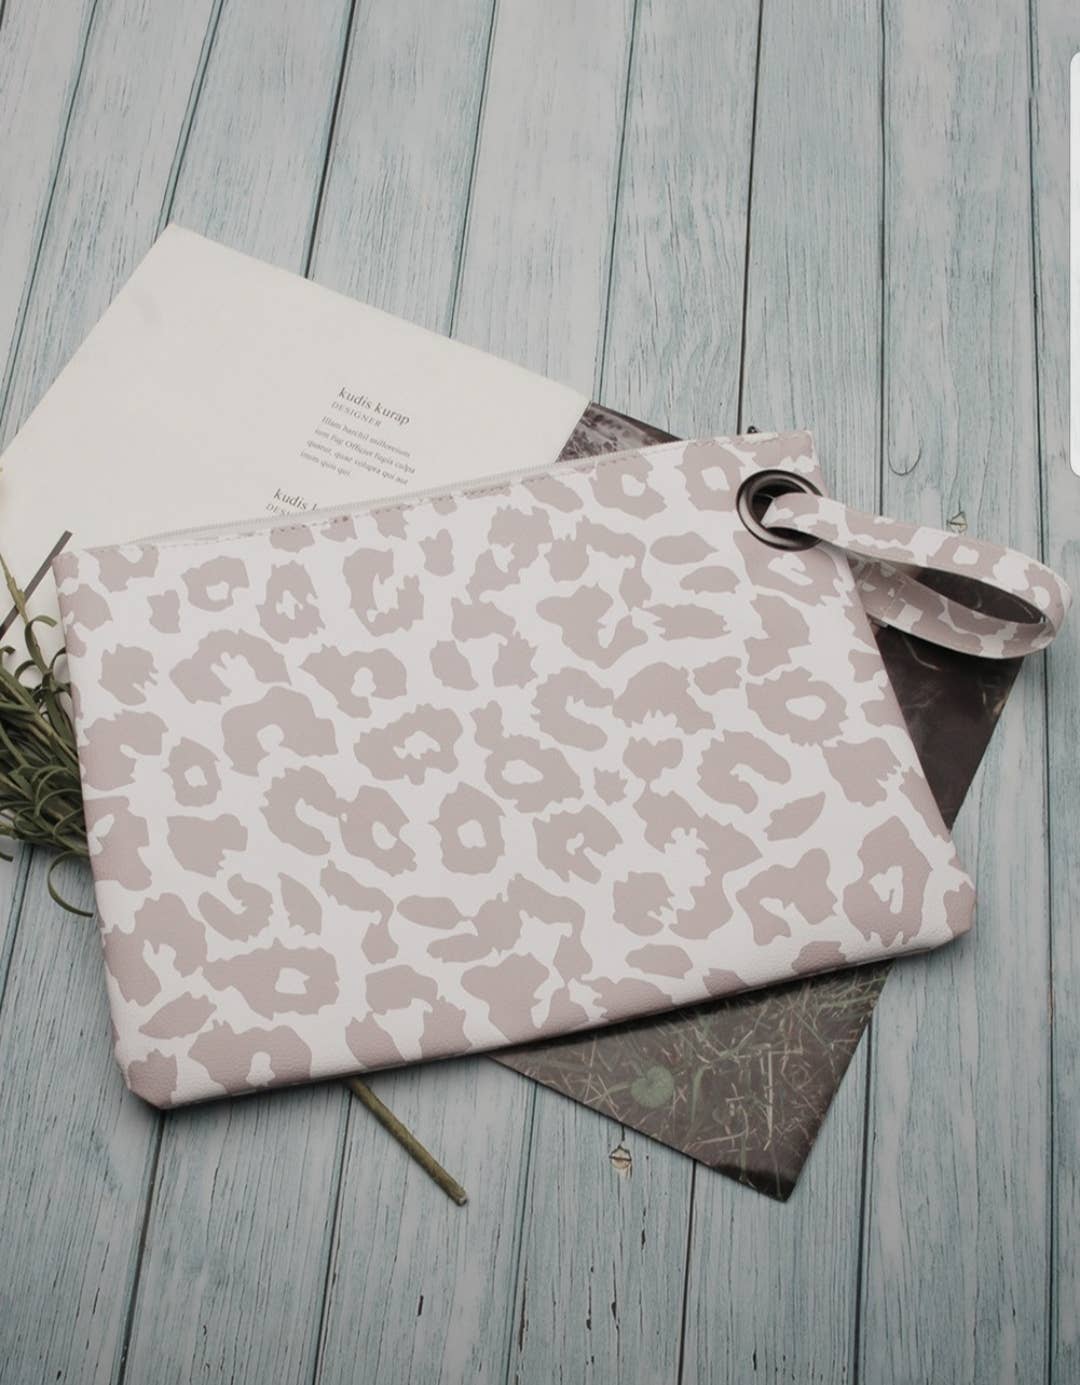 Blushing Owl Co - White & Tan Leopard Print Handbag / Oversized Clutch